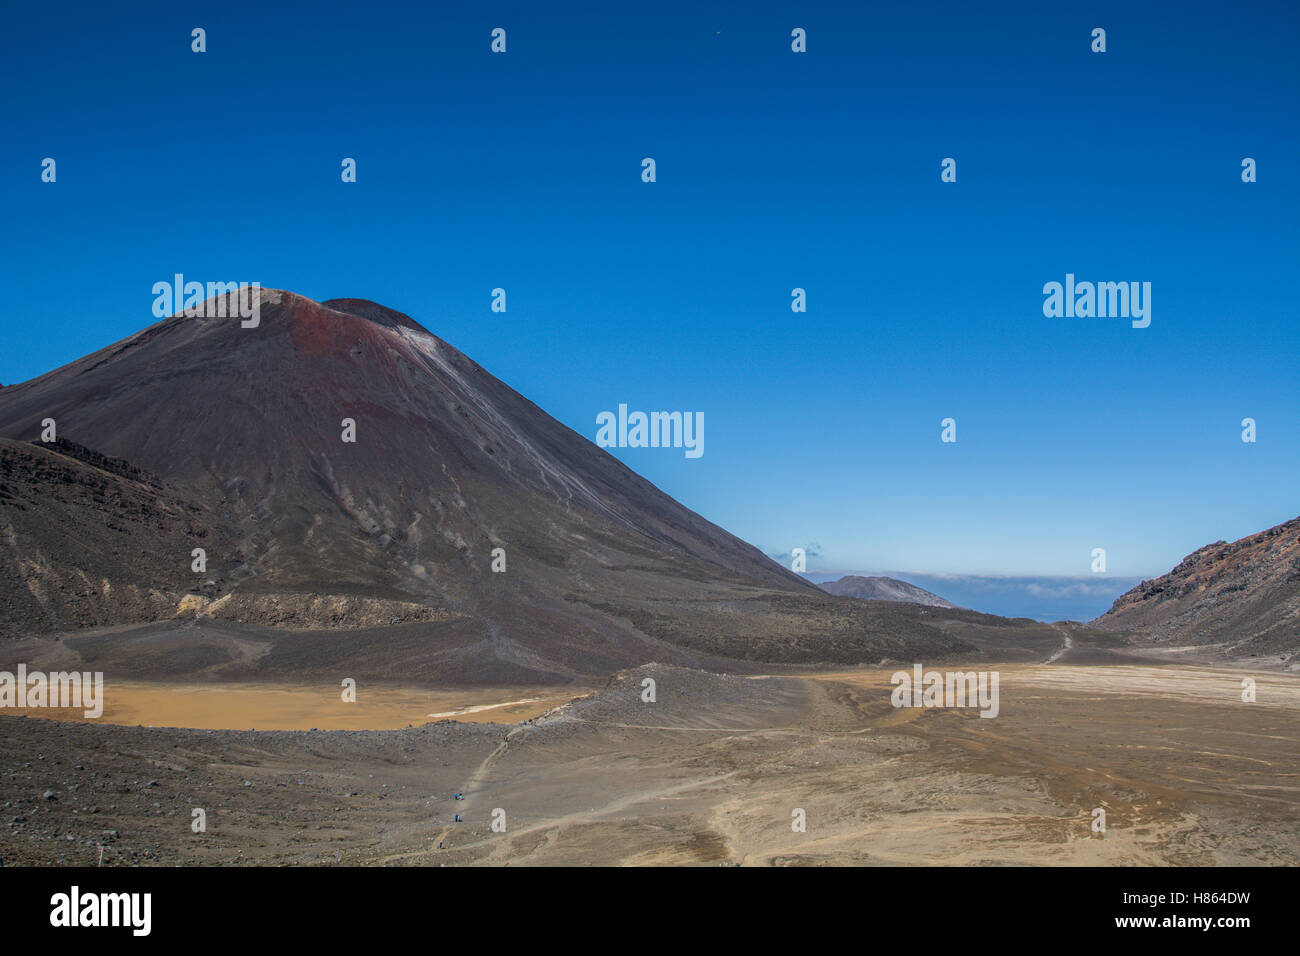 Valley and Volcano (Mt Doom) Stock Photo